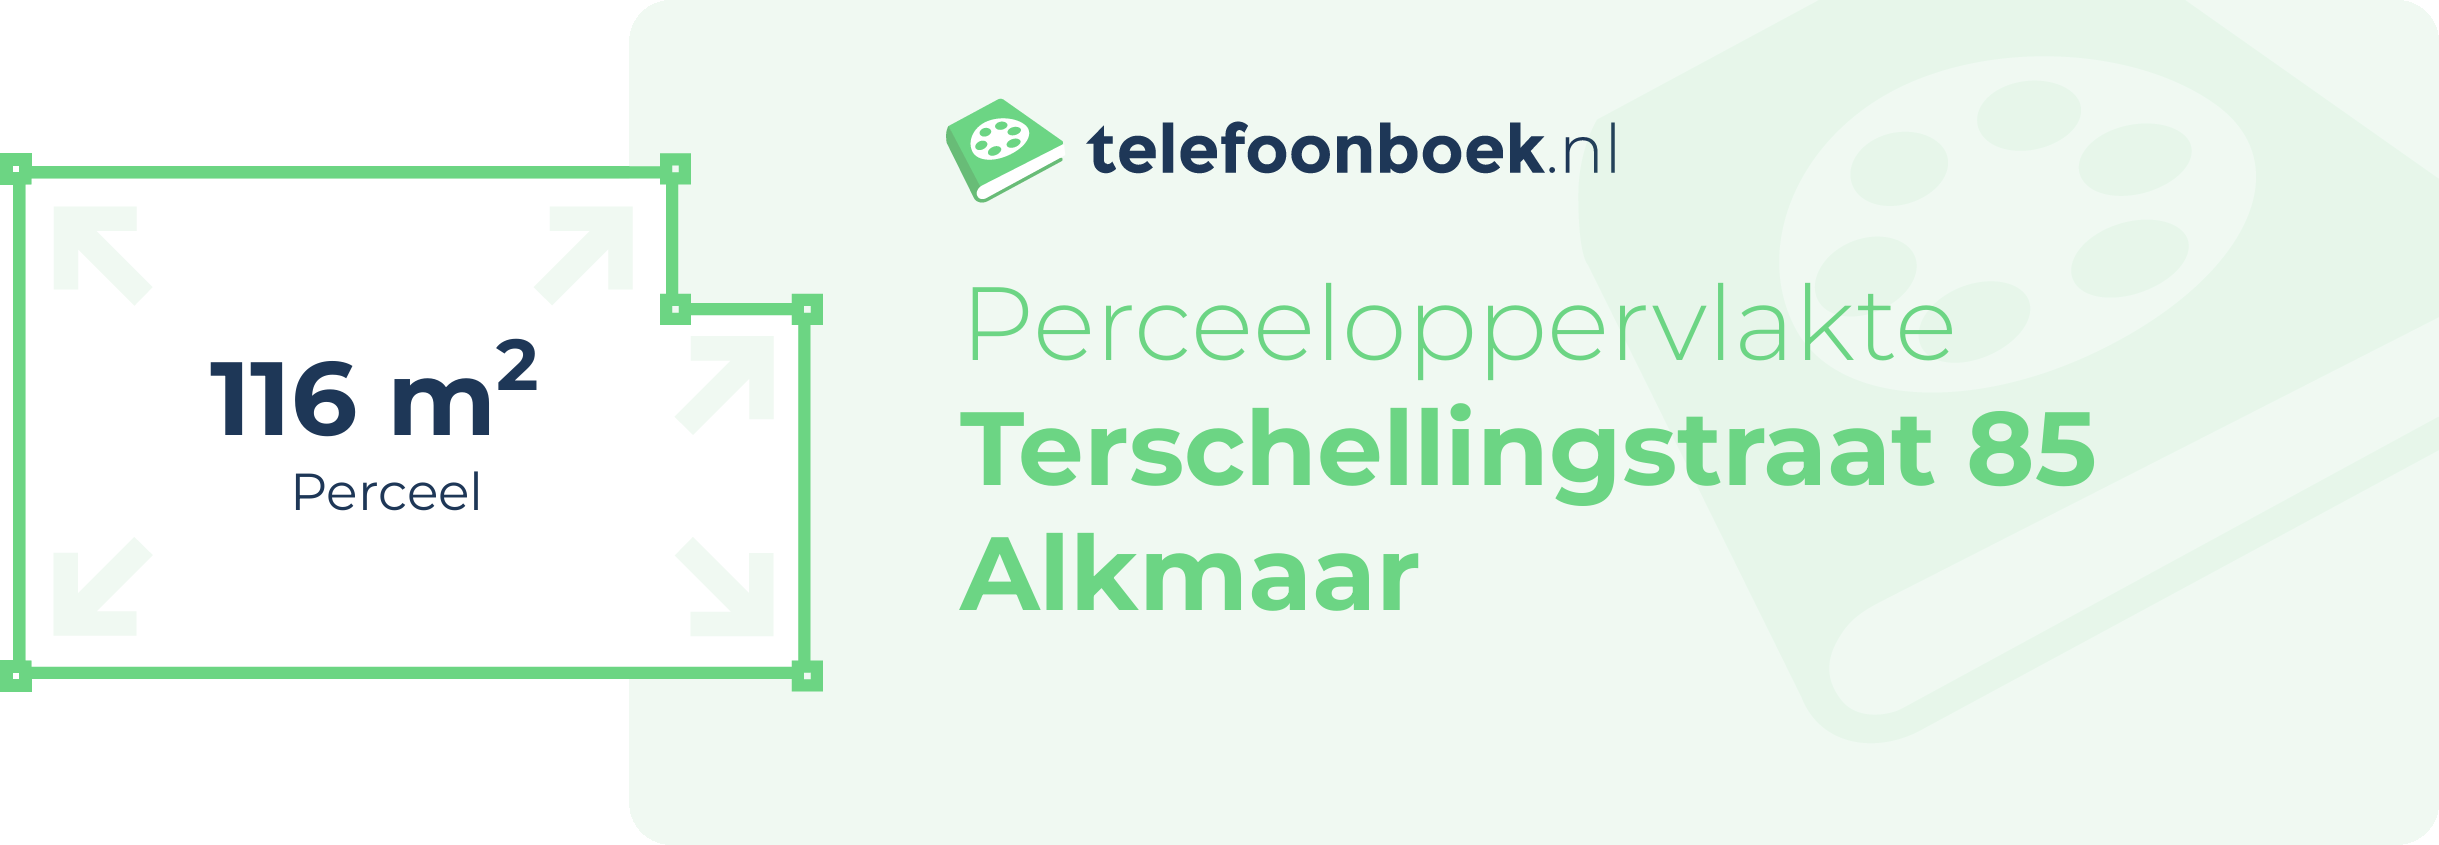 Perceeloppervlakte Terschellingstraat 85 Alkmaar